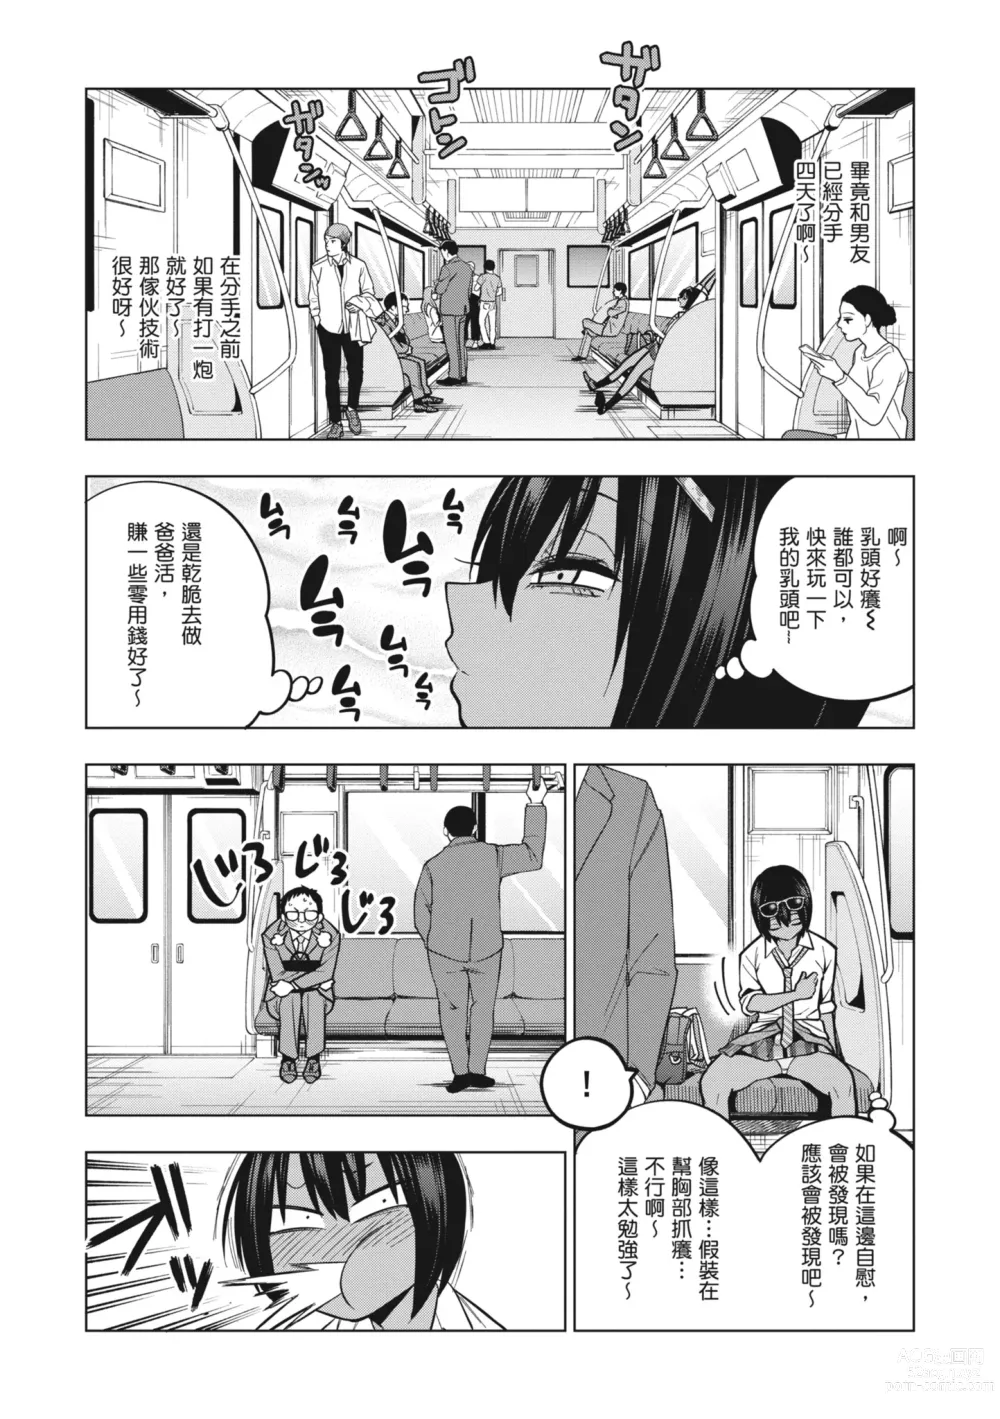 Page 8 of manga Fxxk Street Girls (decensored)